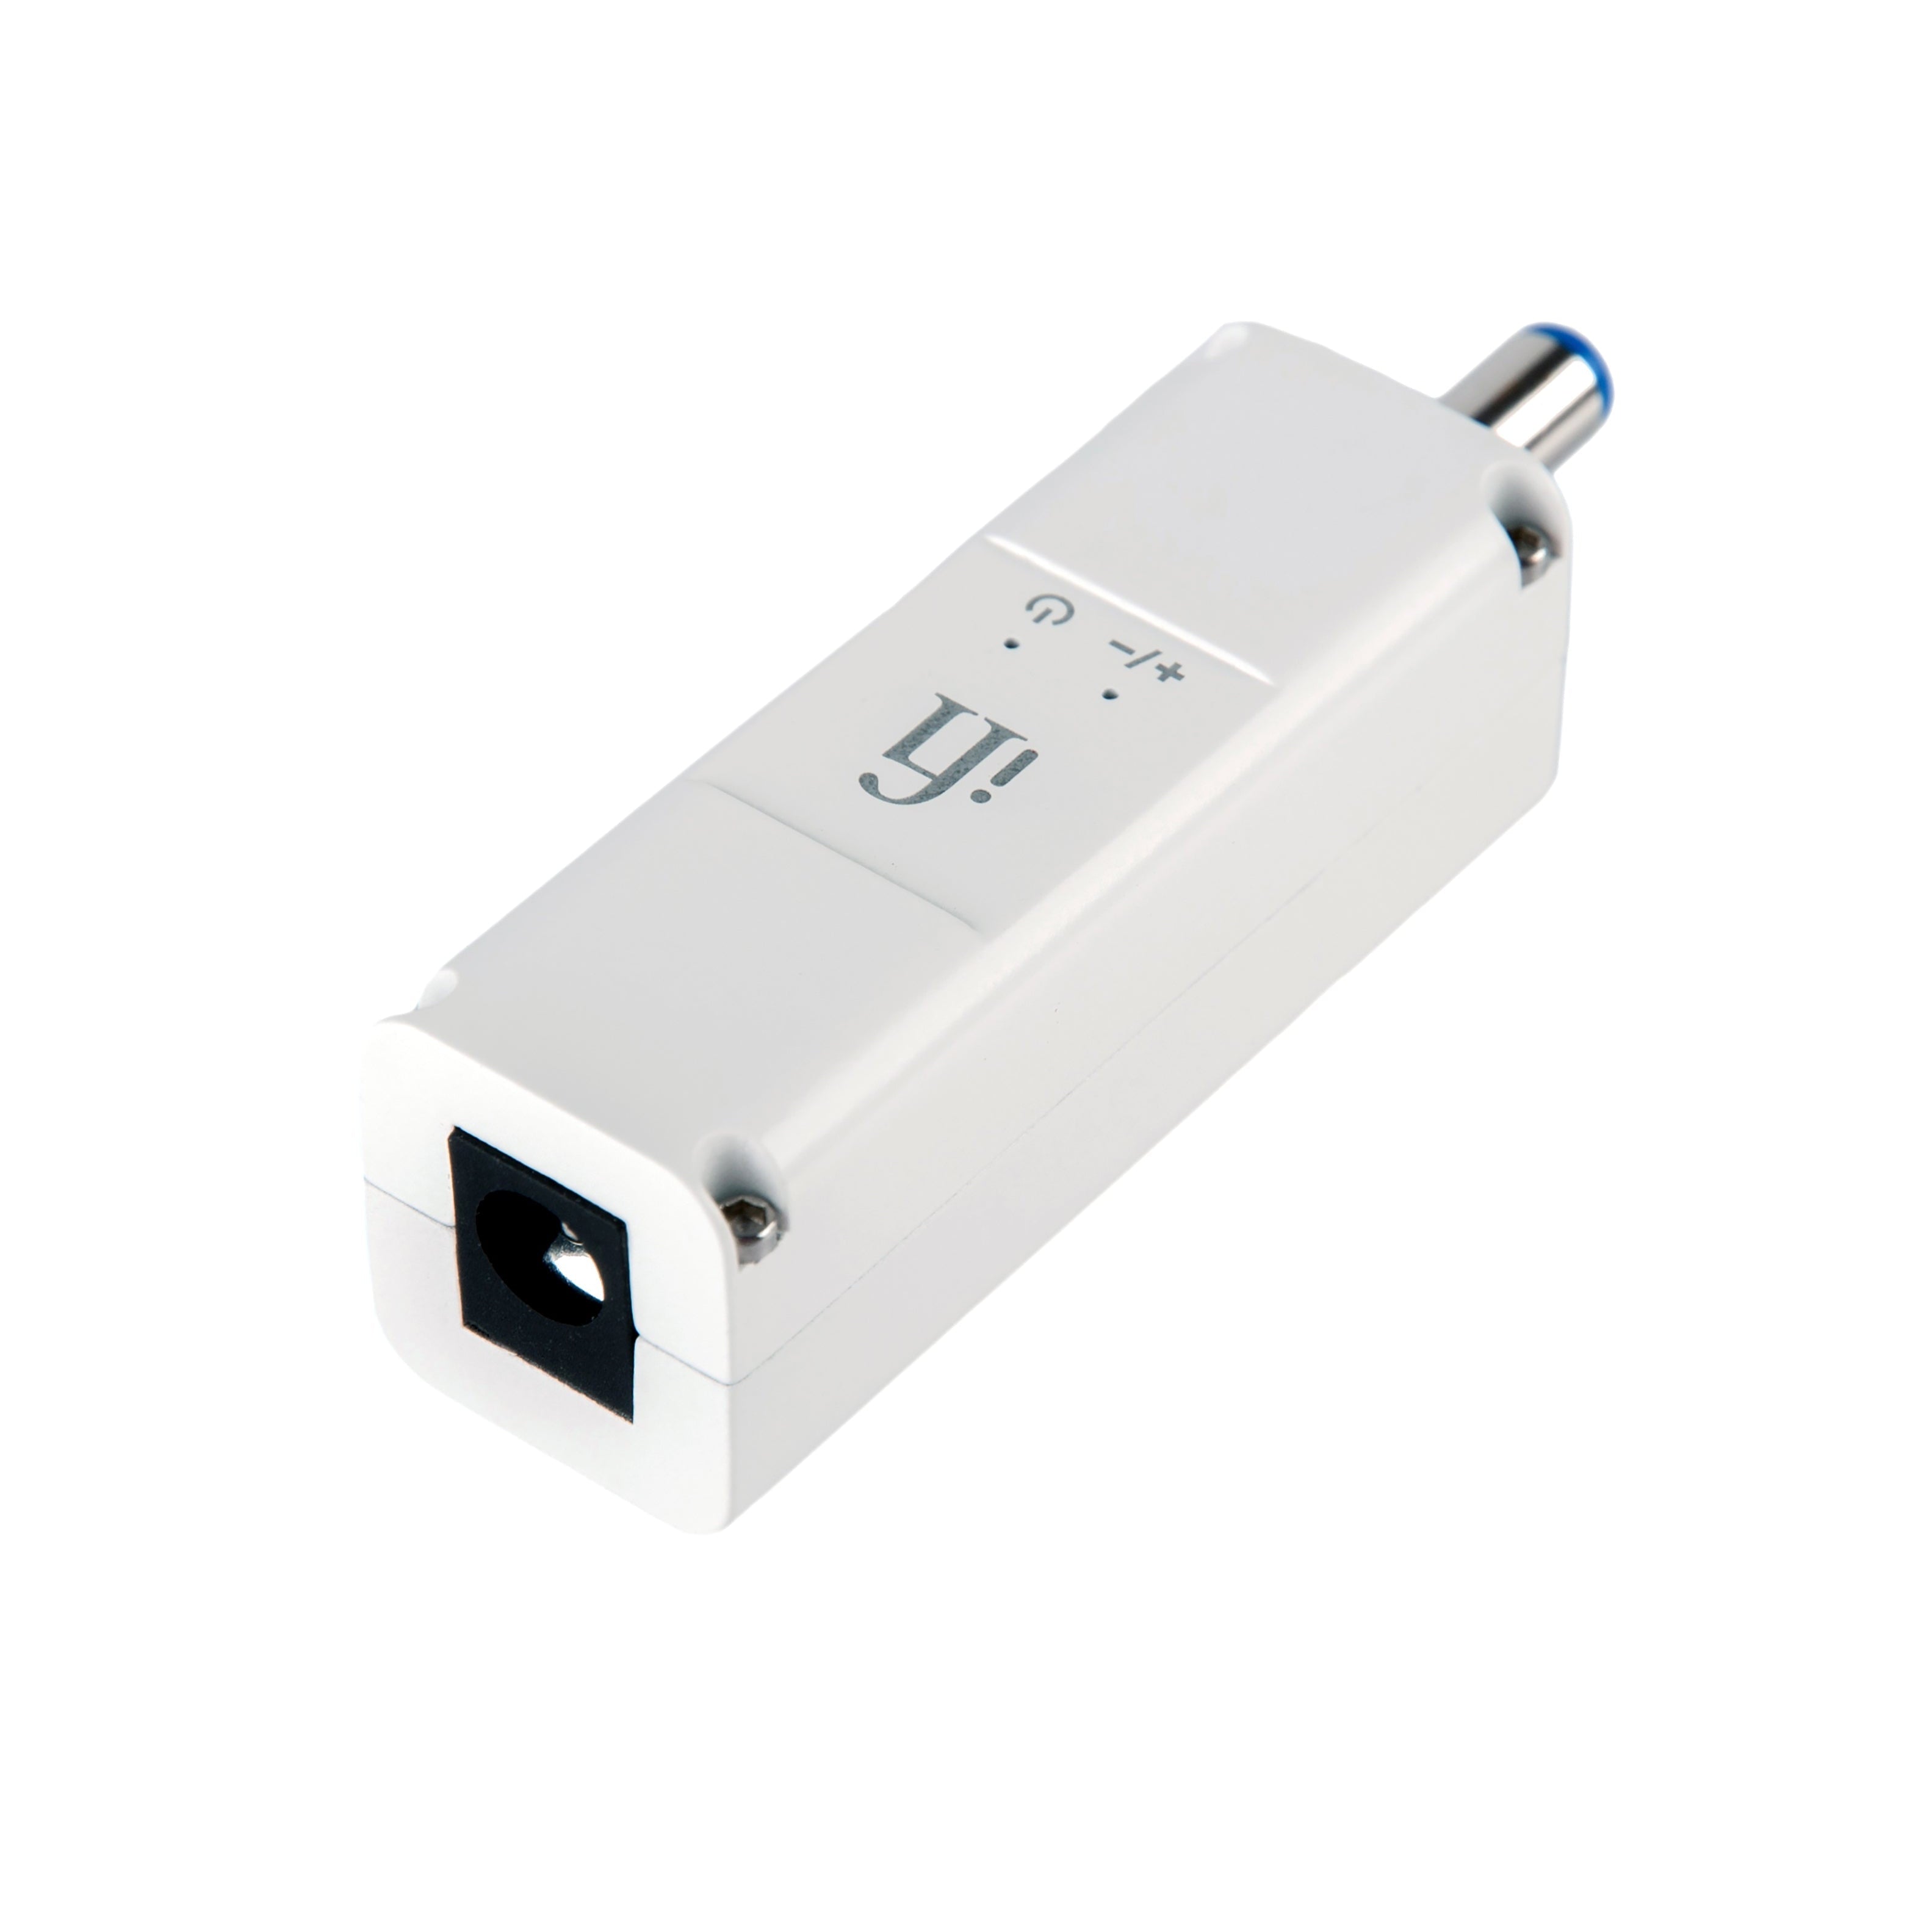 iFi DC iPurifier2 | Audiophile DC Power Filter - New